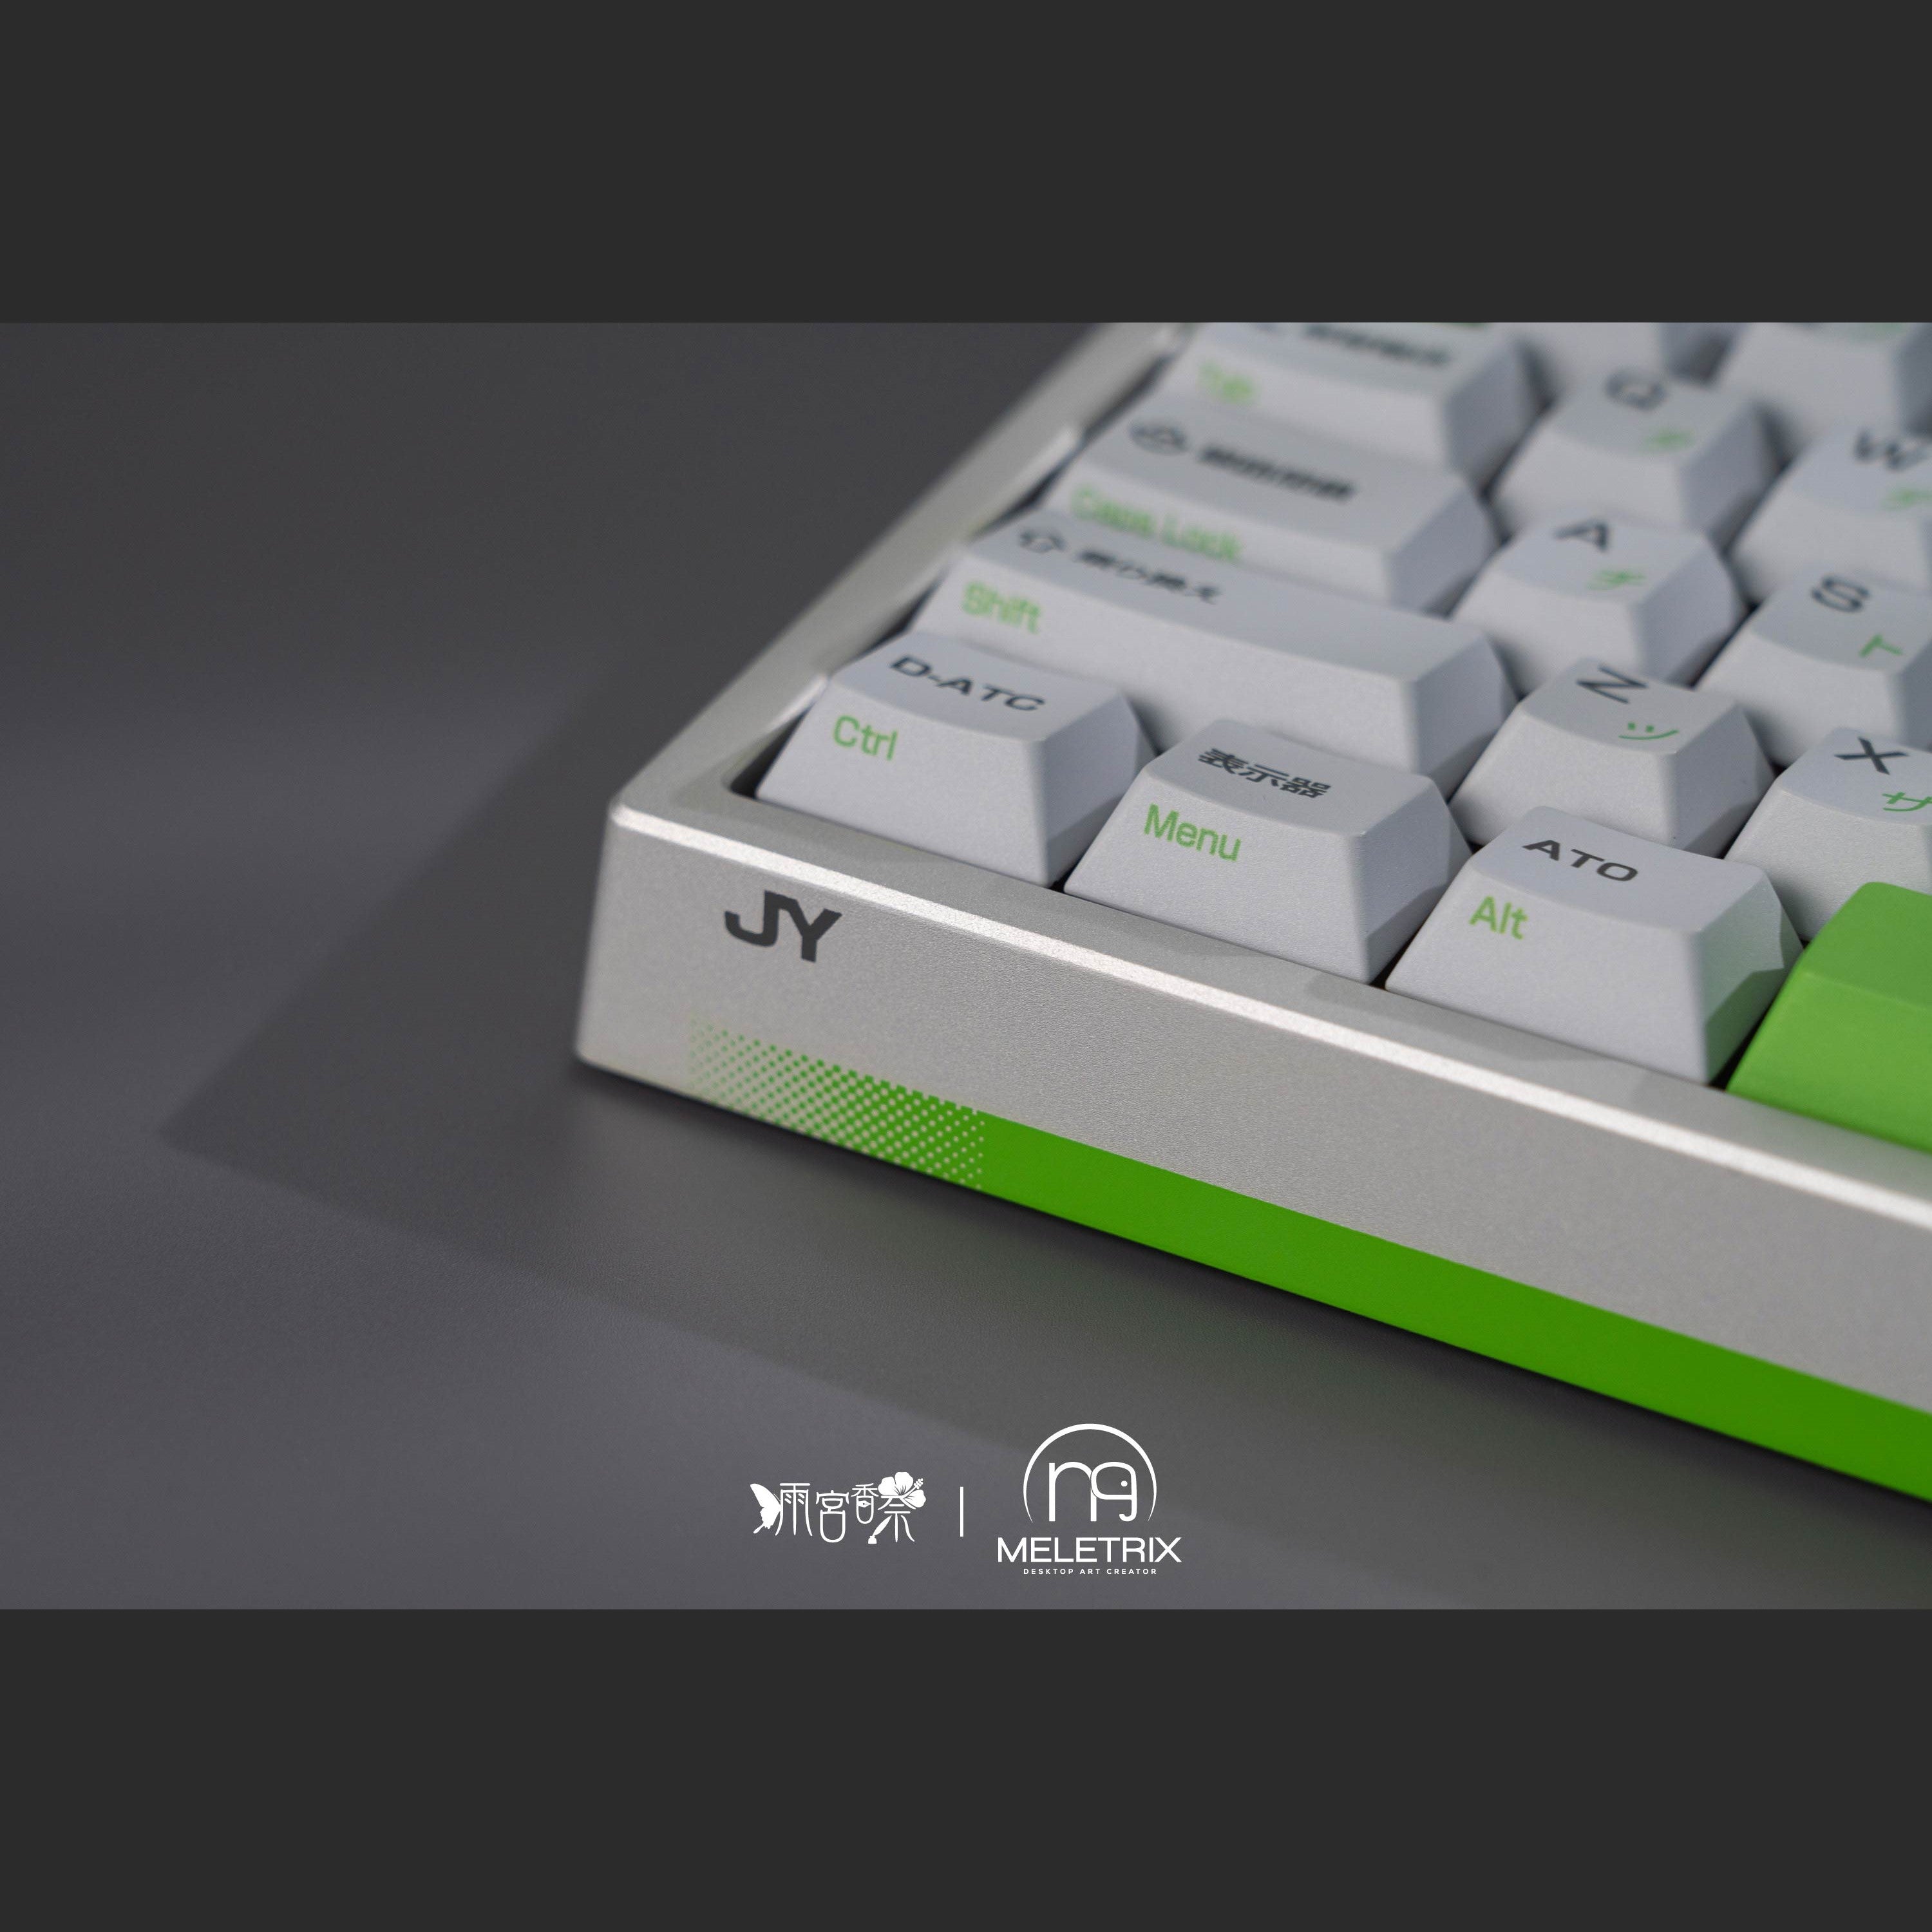 Zoom65V2 x Yamanote Line Theme Keyboard Kit